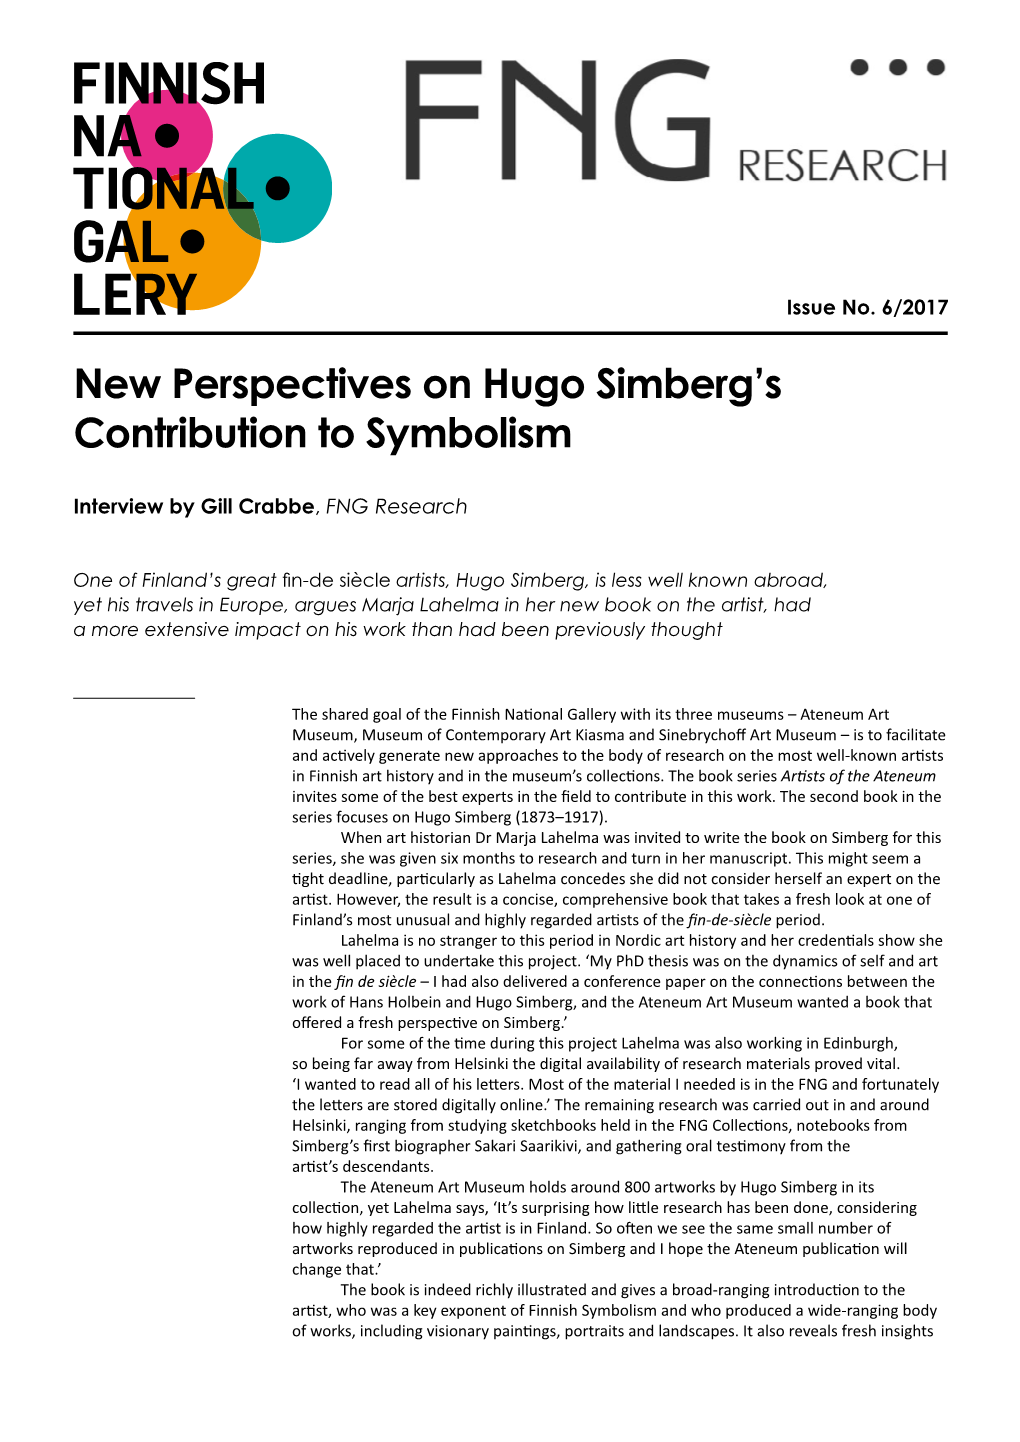 New Perspectives on Hugo Simberg's Contribution to Symbolism